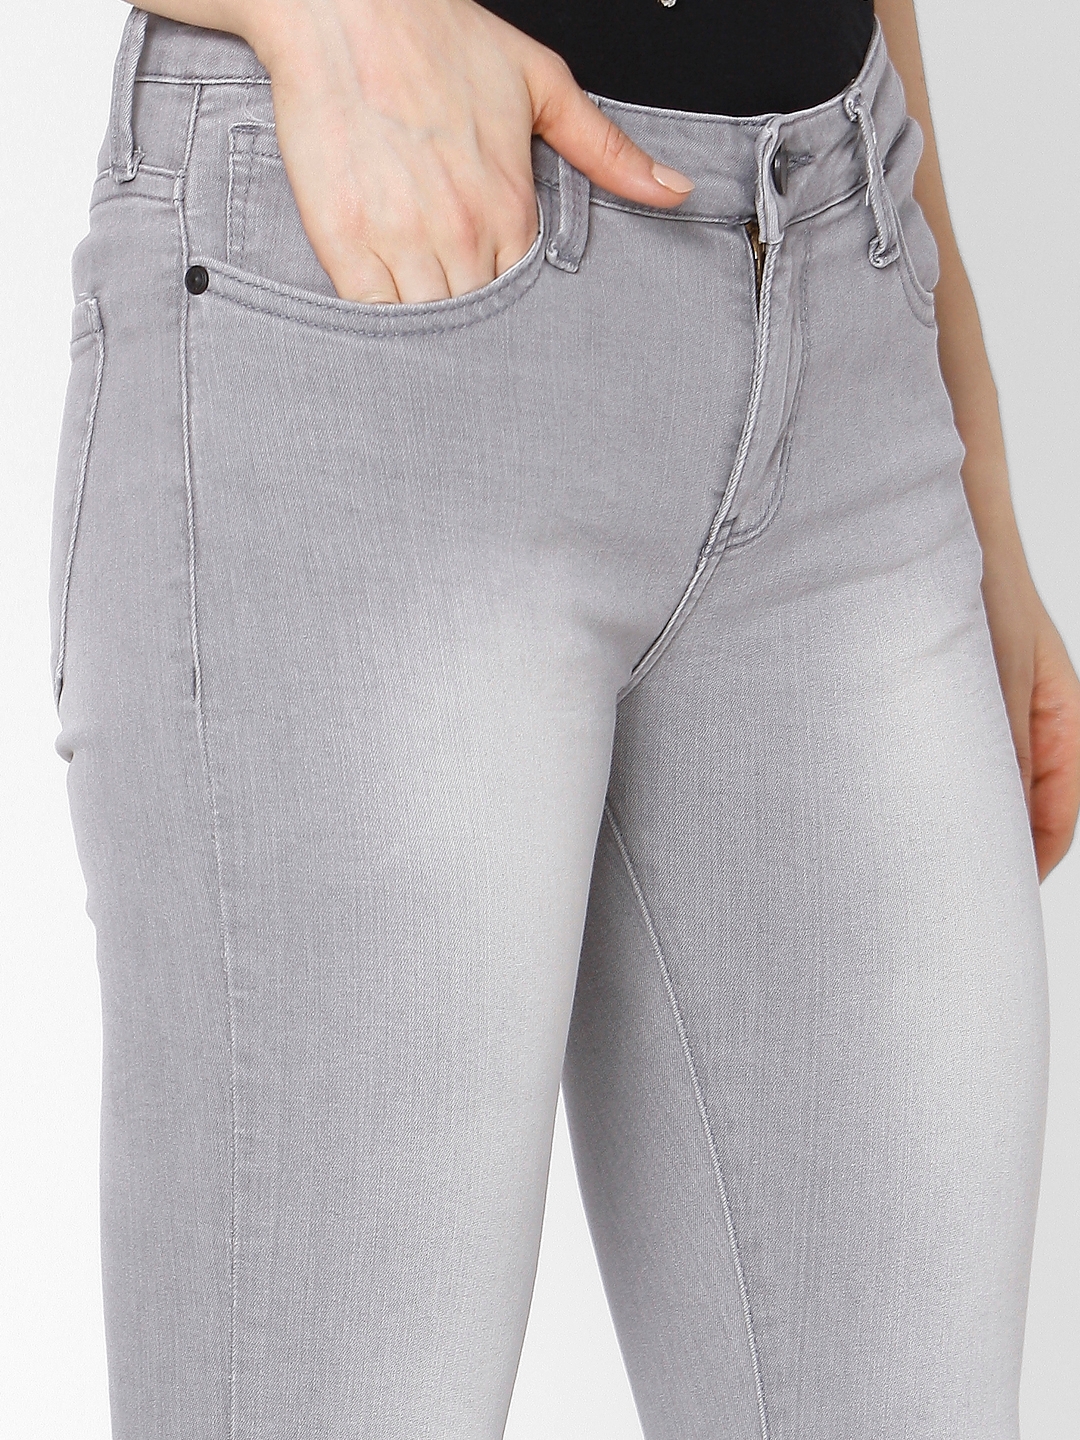 Spykar | Women's Grey Cotton Solid Skinny Jeans 5